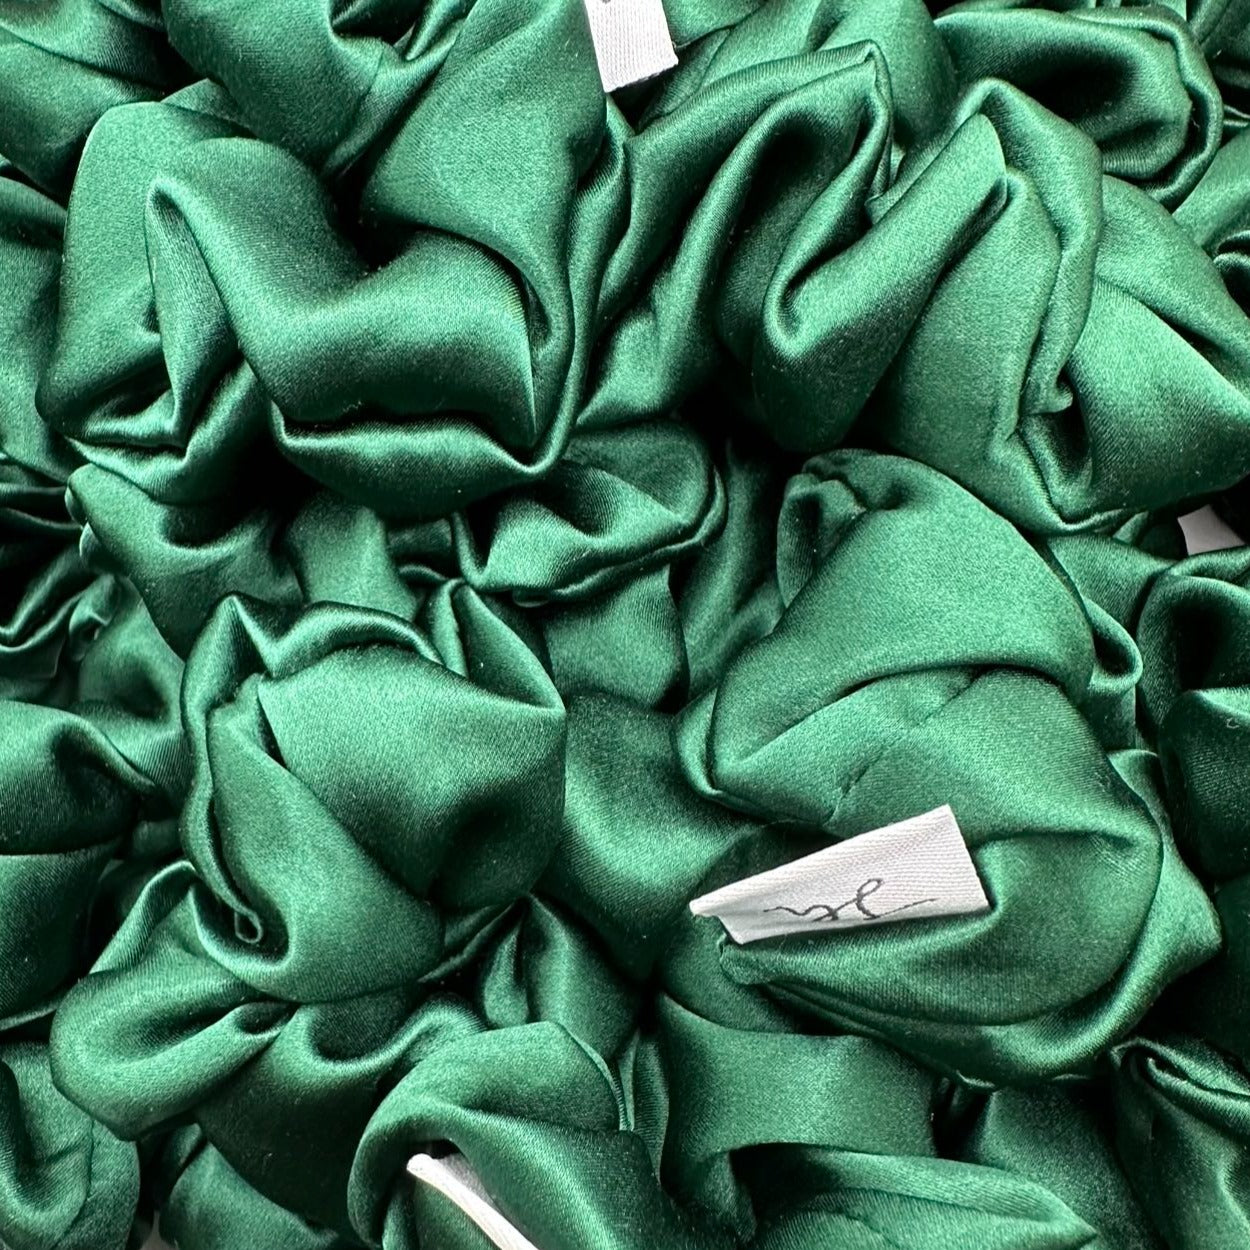 Síoda Silky 100% Mulberry Silk scrunchie size medium colour is Emerald Green